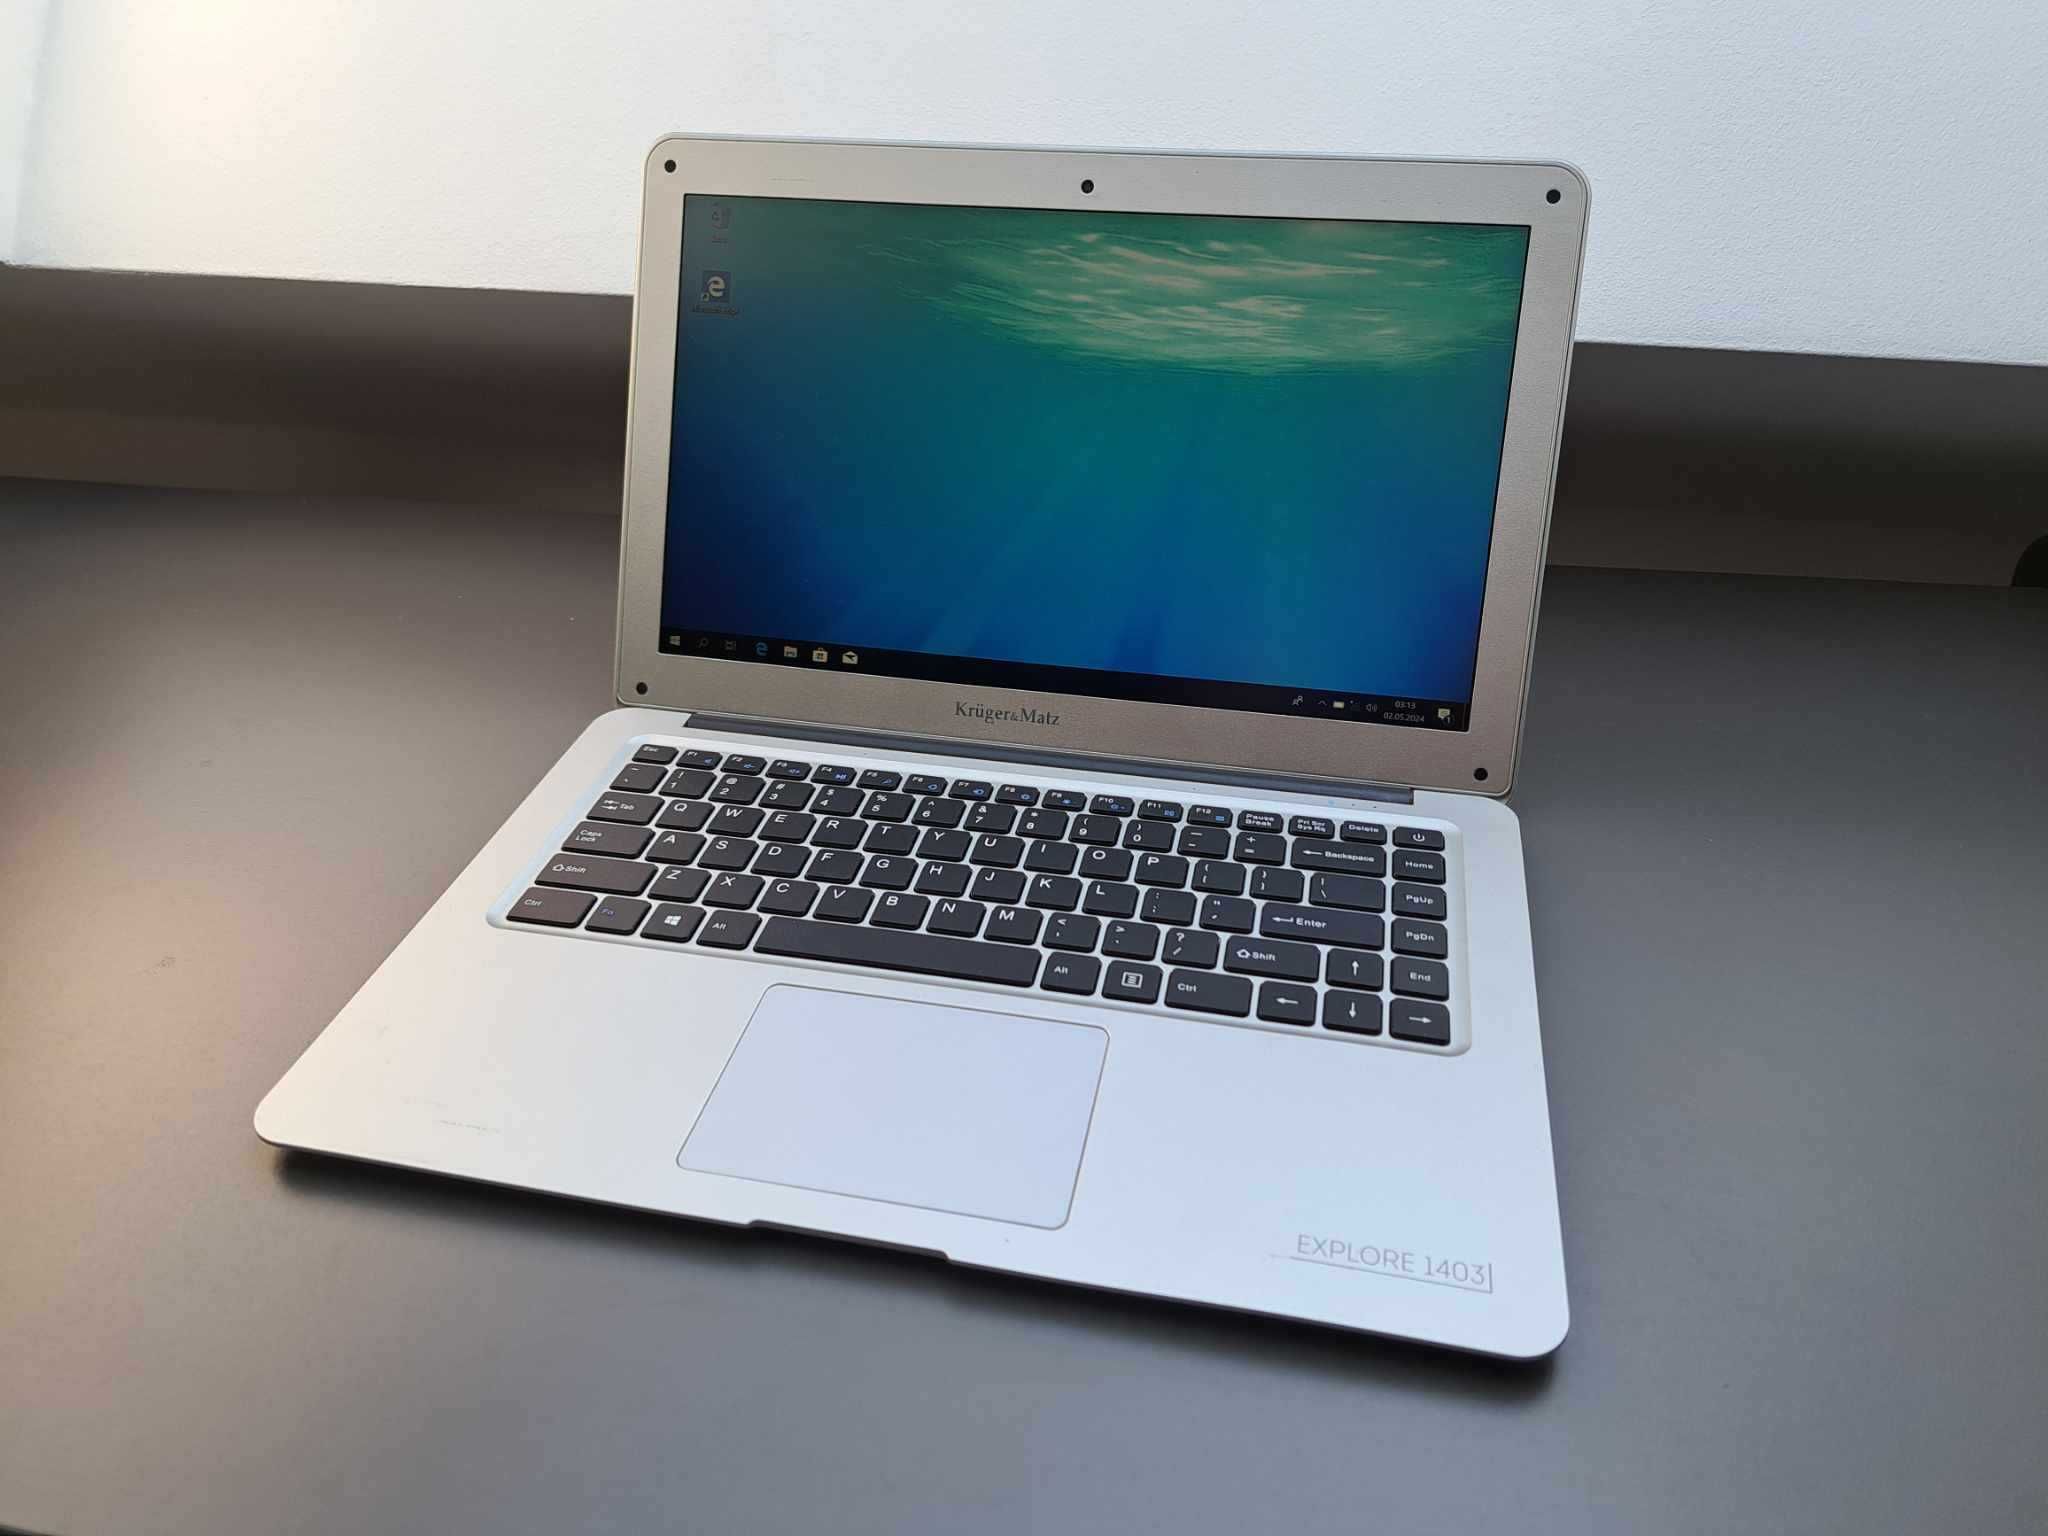 Laptop Kruger&Matz Explore 1403 Intel Windows 10 Full HD